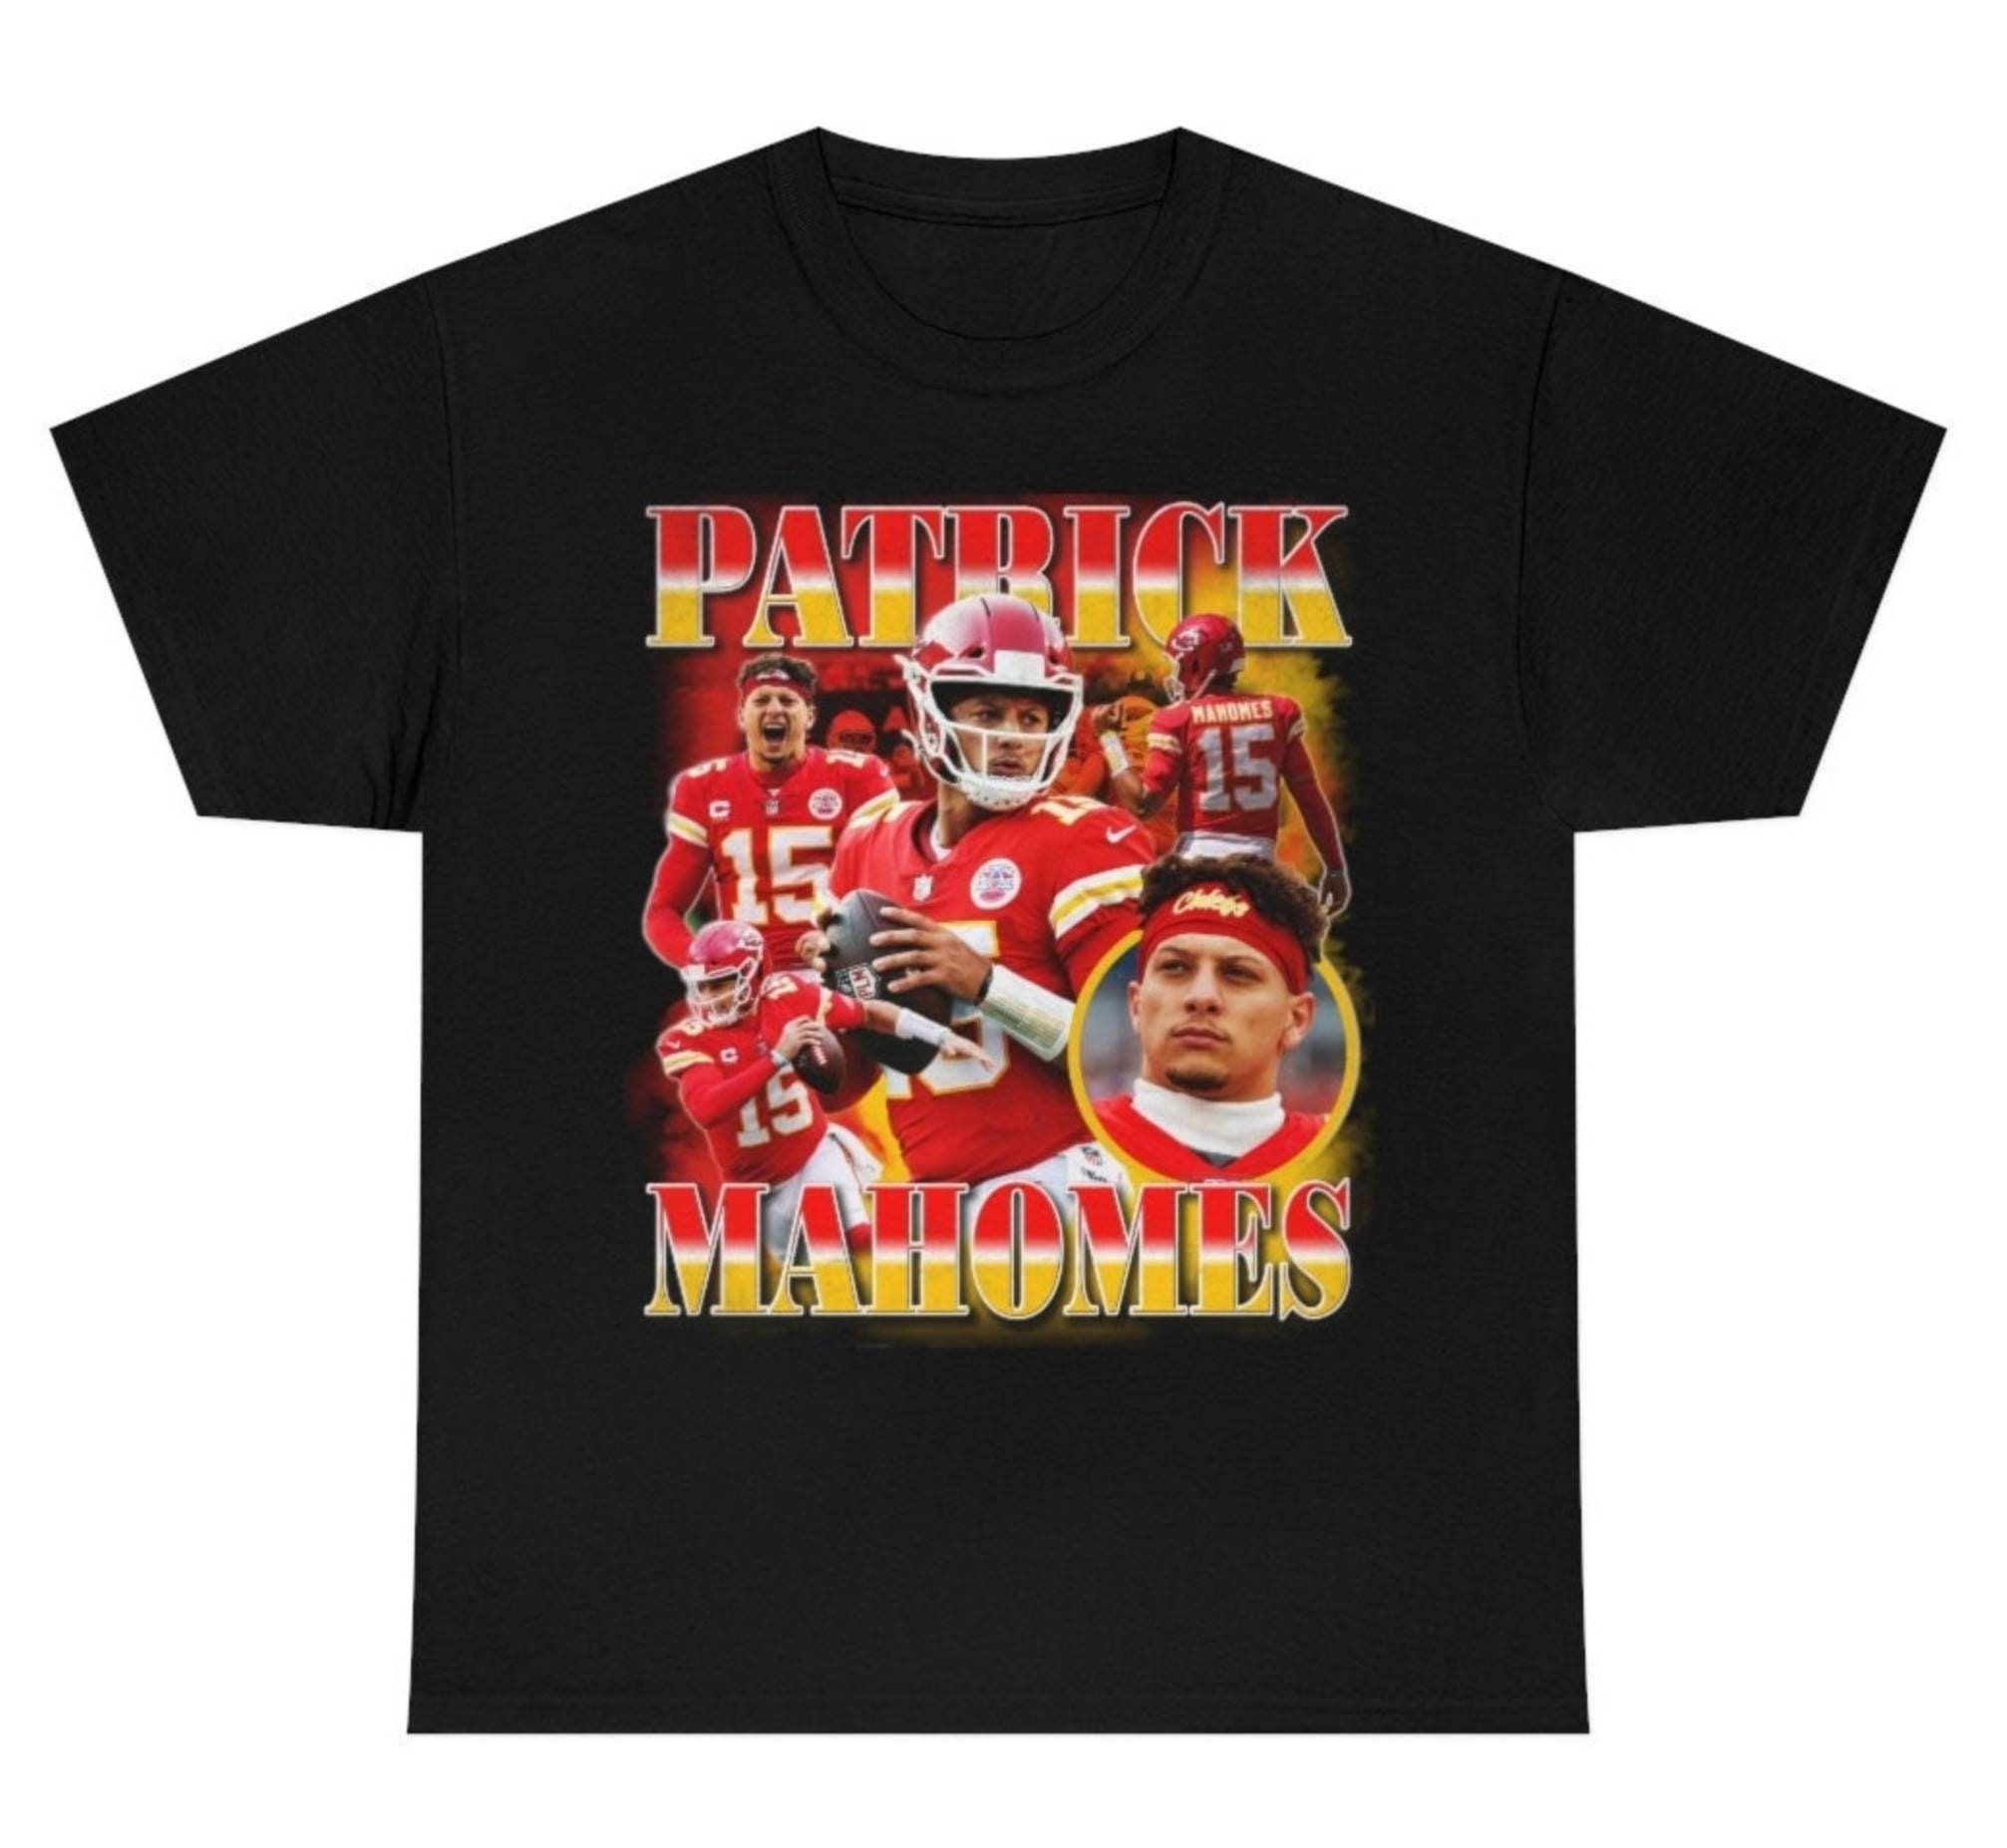 Patrick Mahomes Vintage T-Shirt, Kansas City Chiefs Patrick Mahomes T Shirt